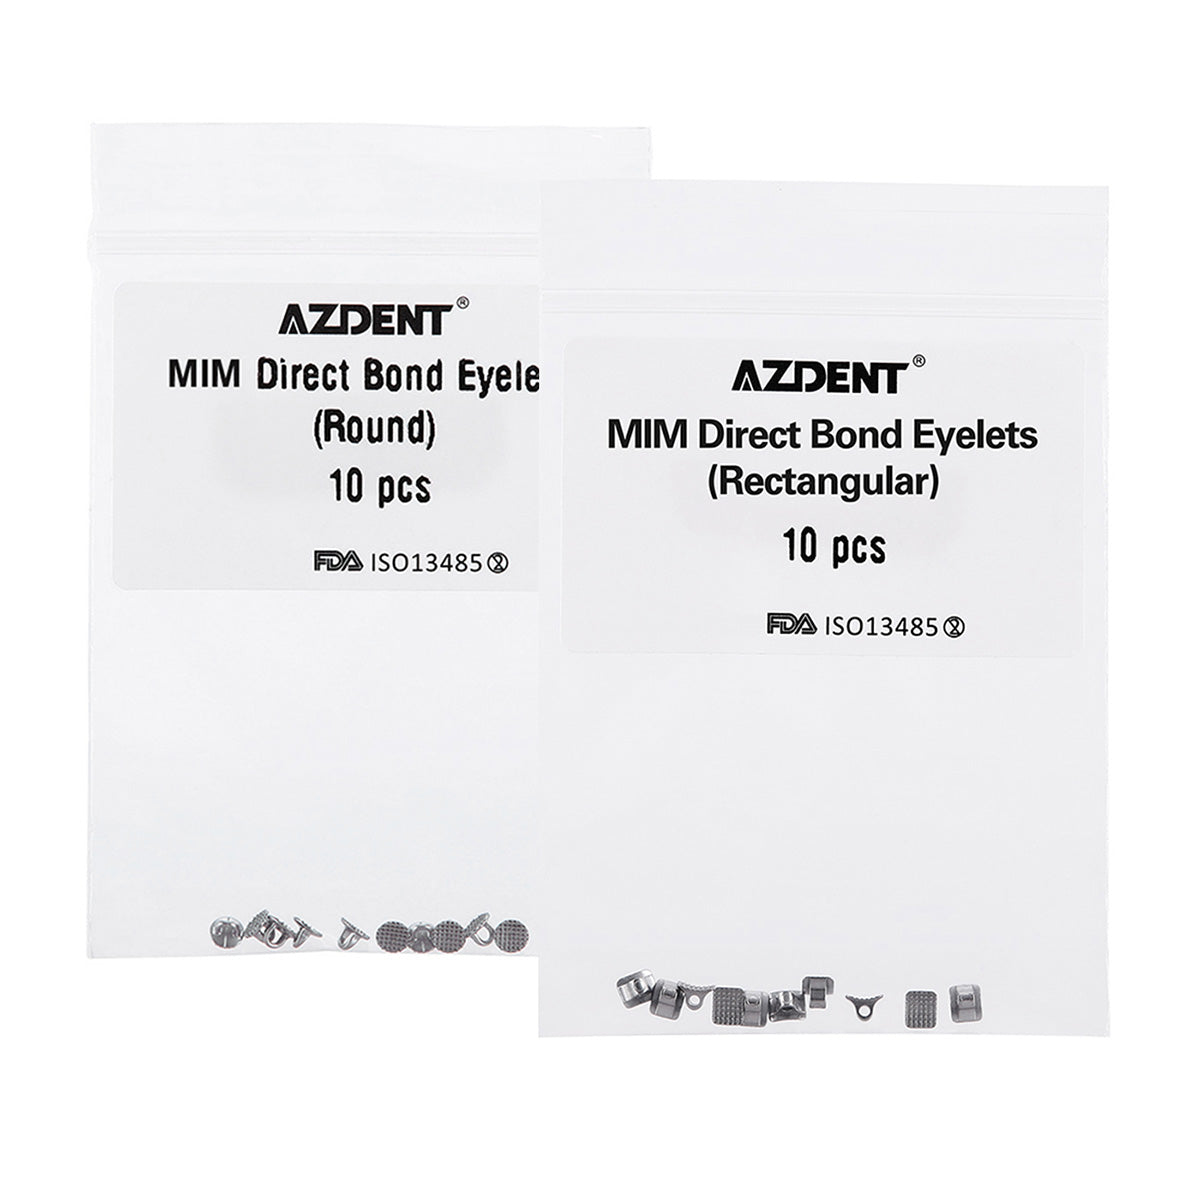 AZDENT Dental Metal Brackets Mini MBT Slot .022 Hooks on 345 20pcs/Pac